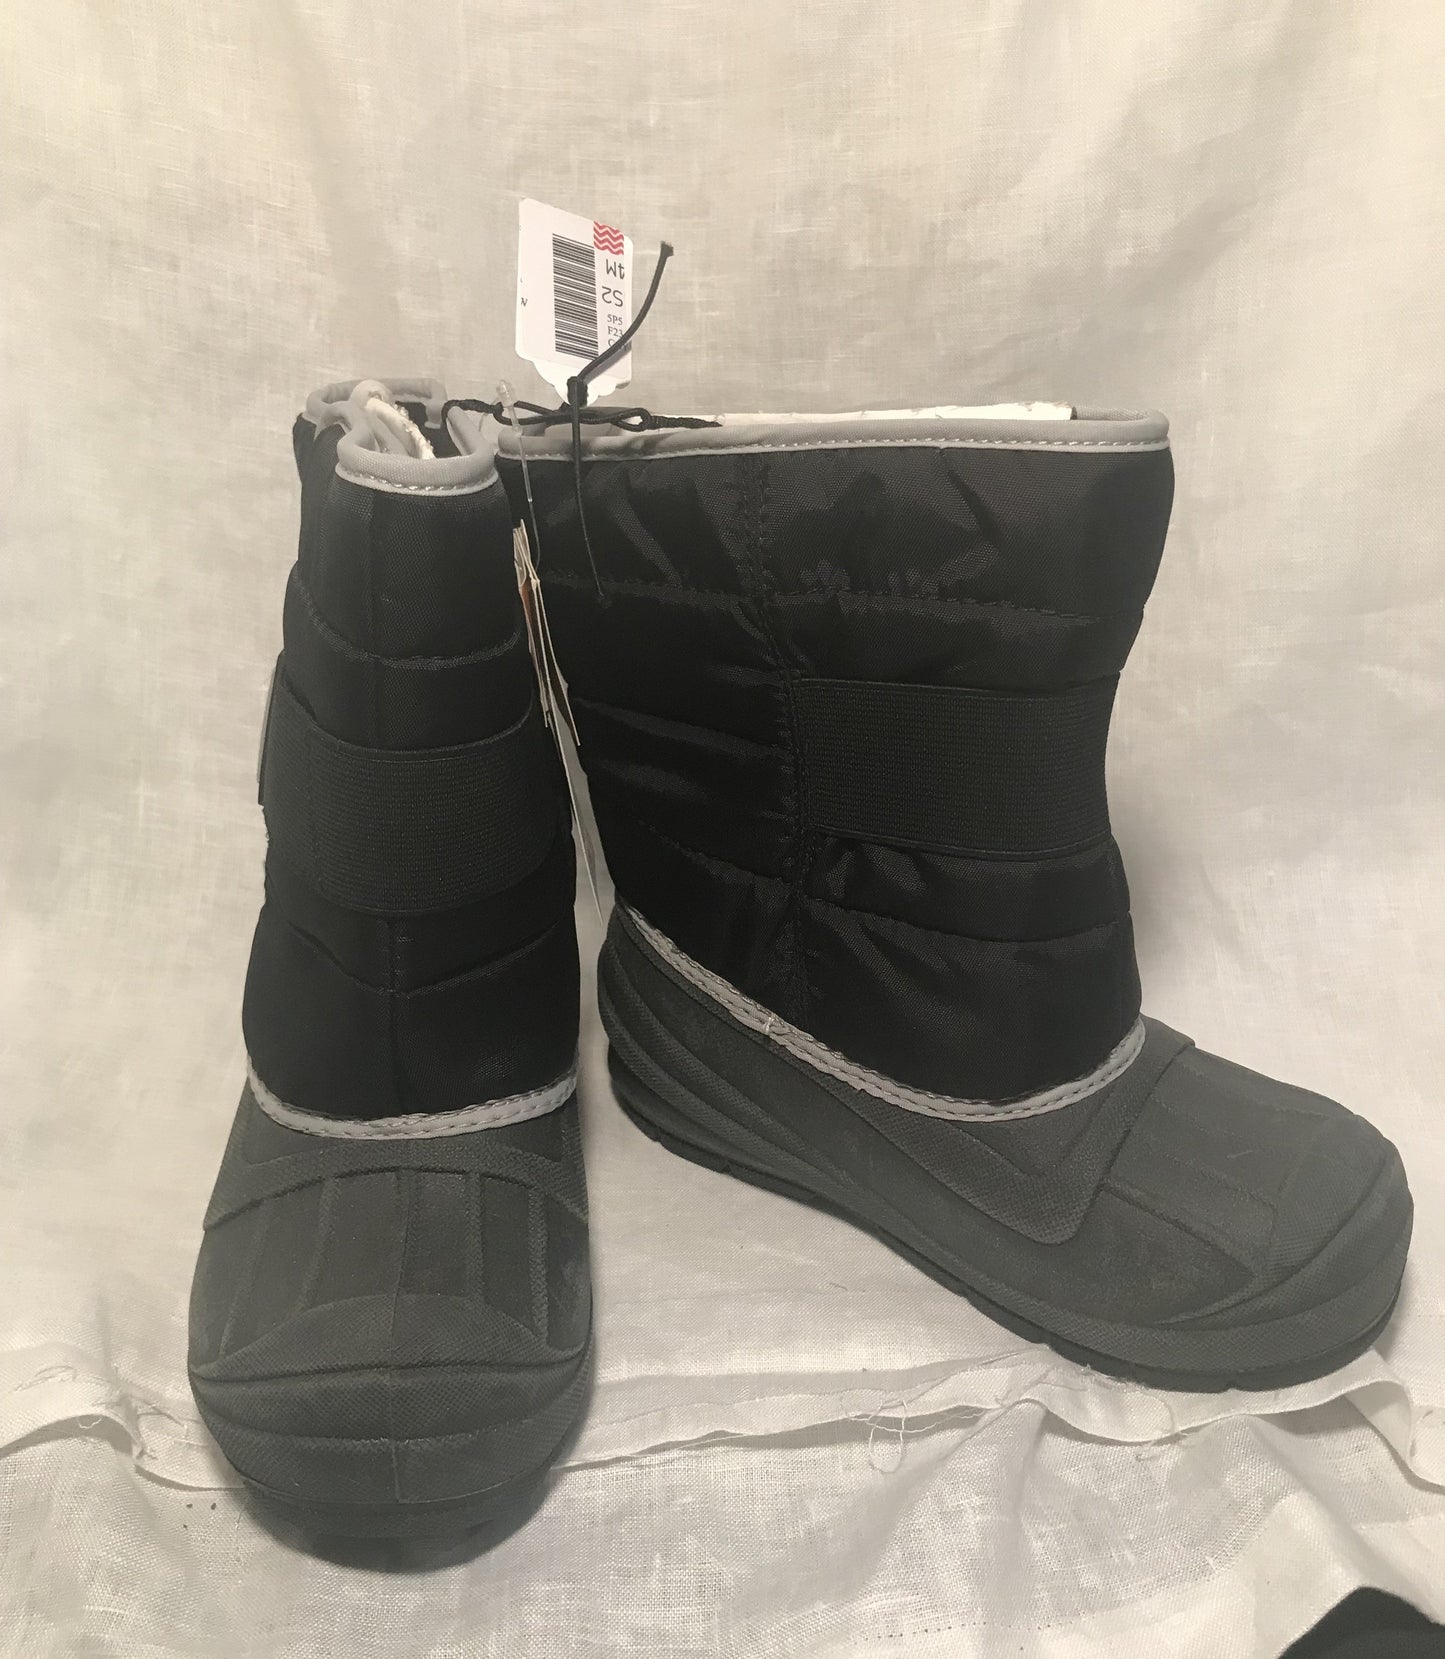 Black & Gray Boots- Sizes 12